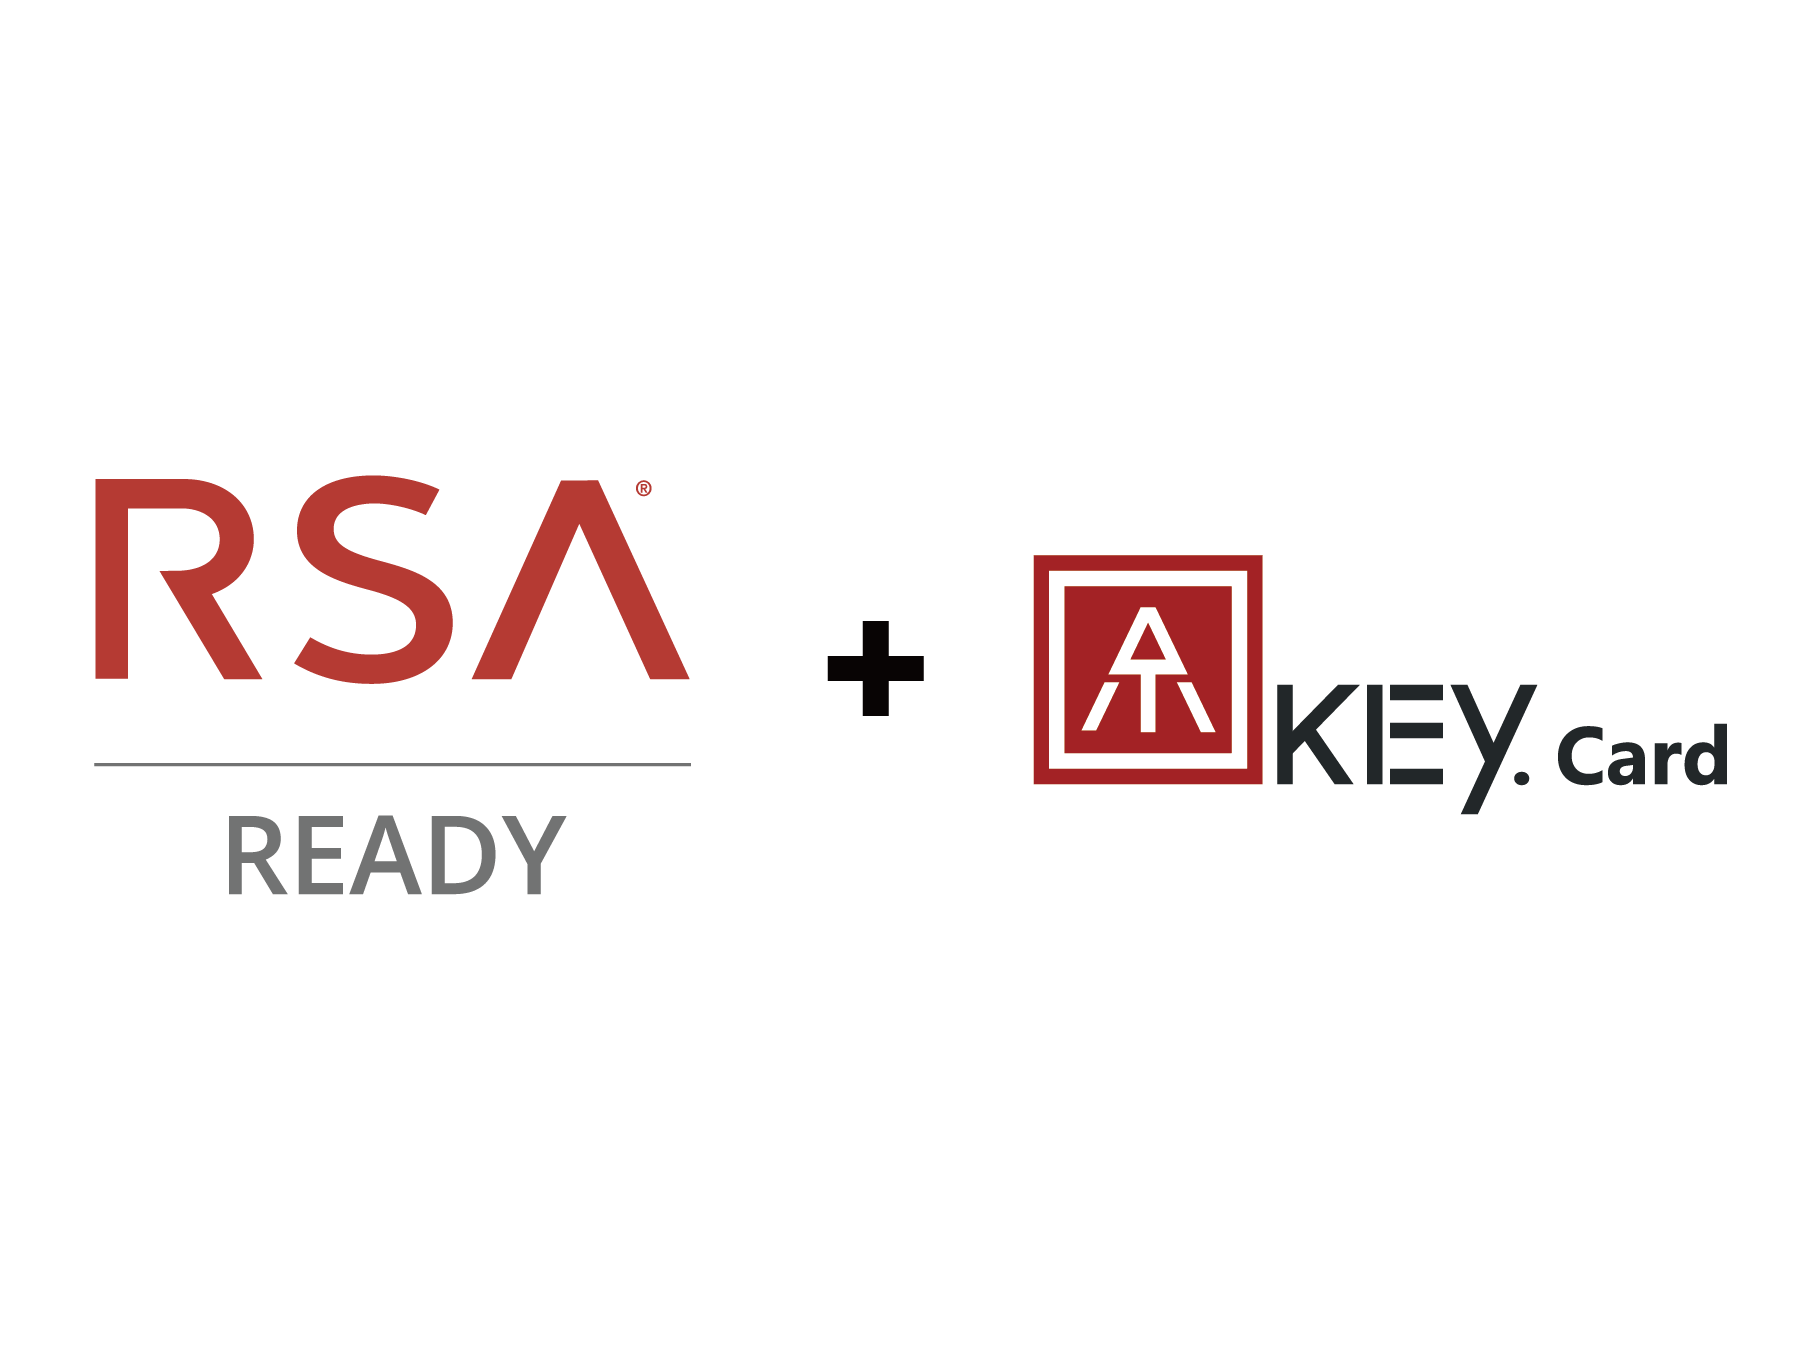 RSA Ready ATKey Card